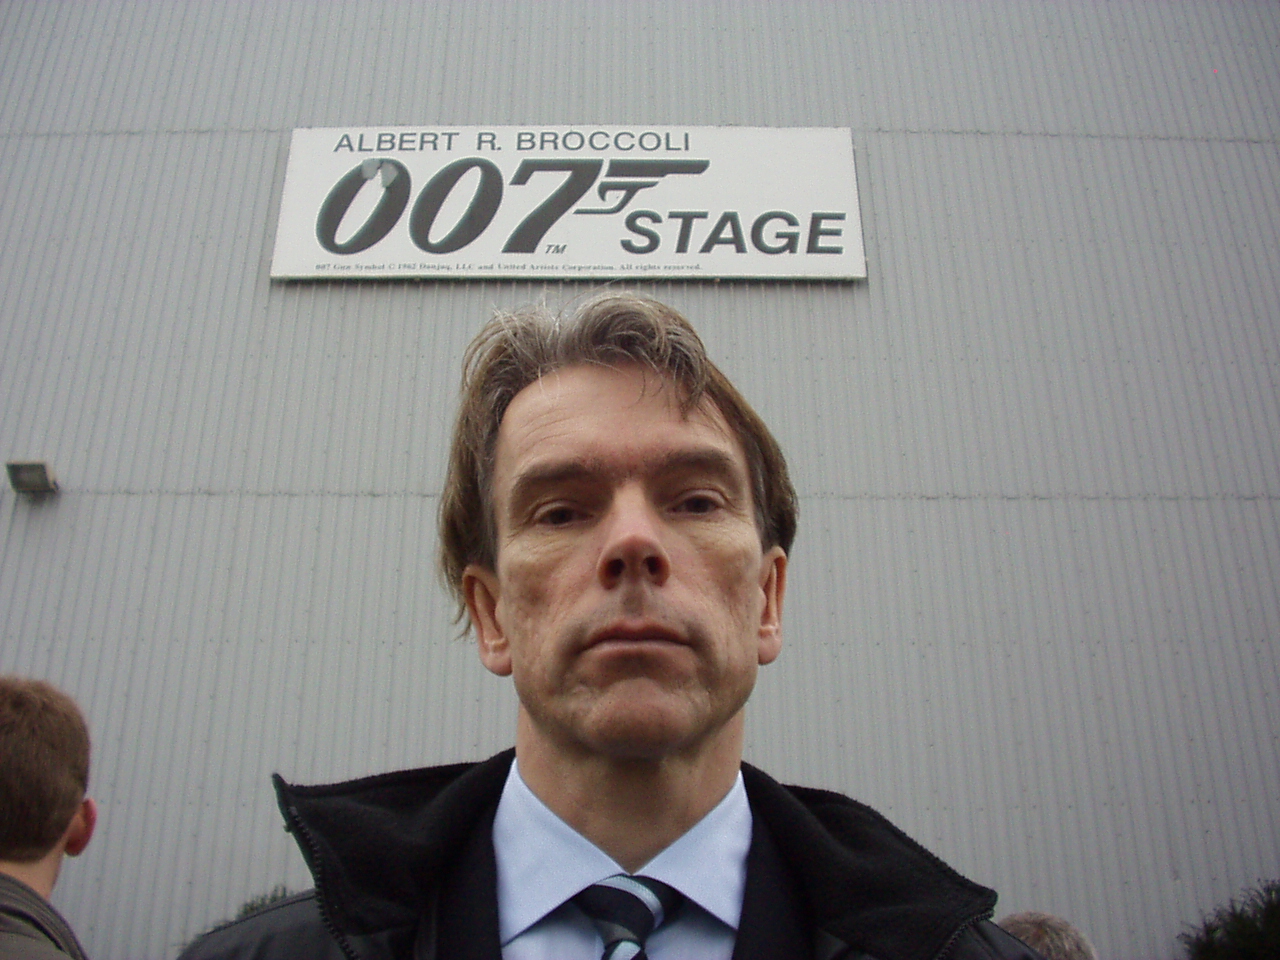 The name is Bond James Bond in Pinewood studios London